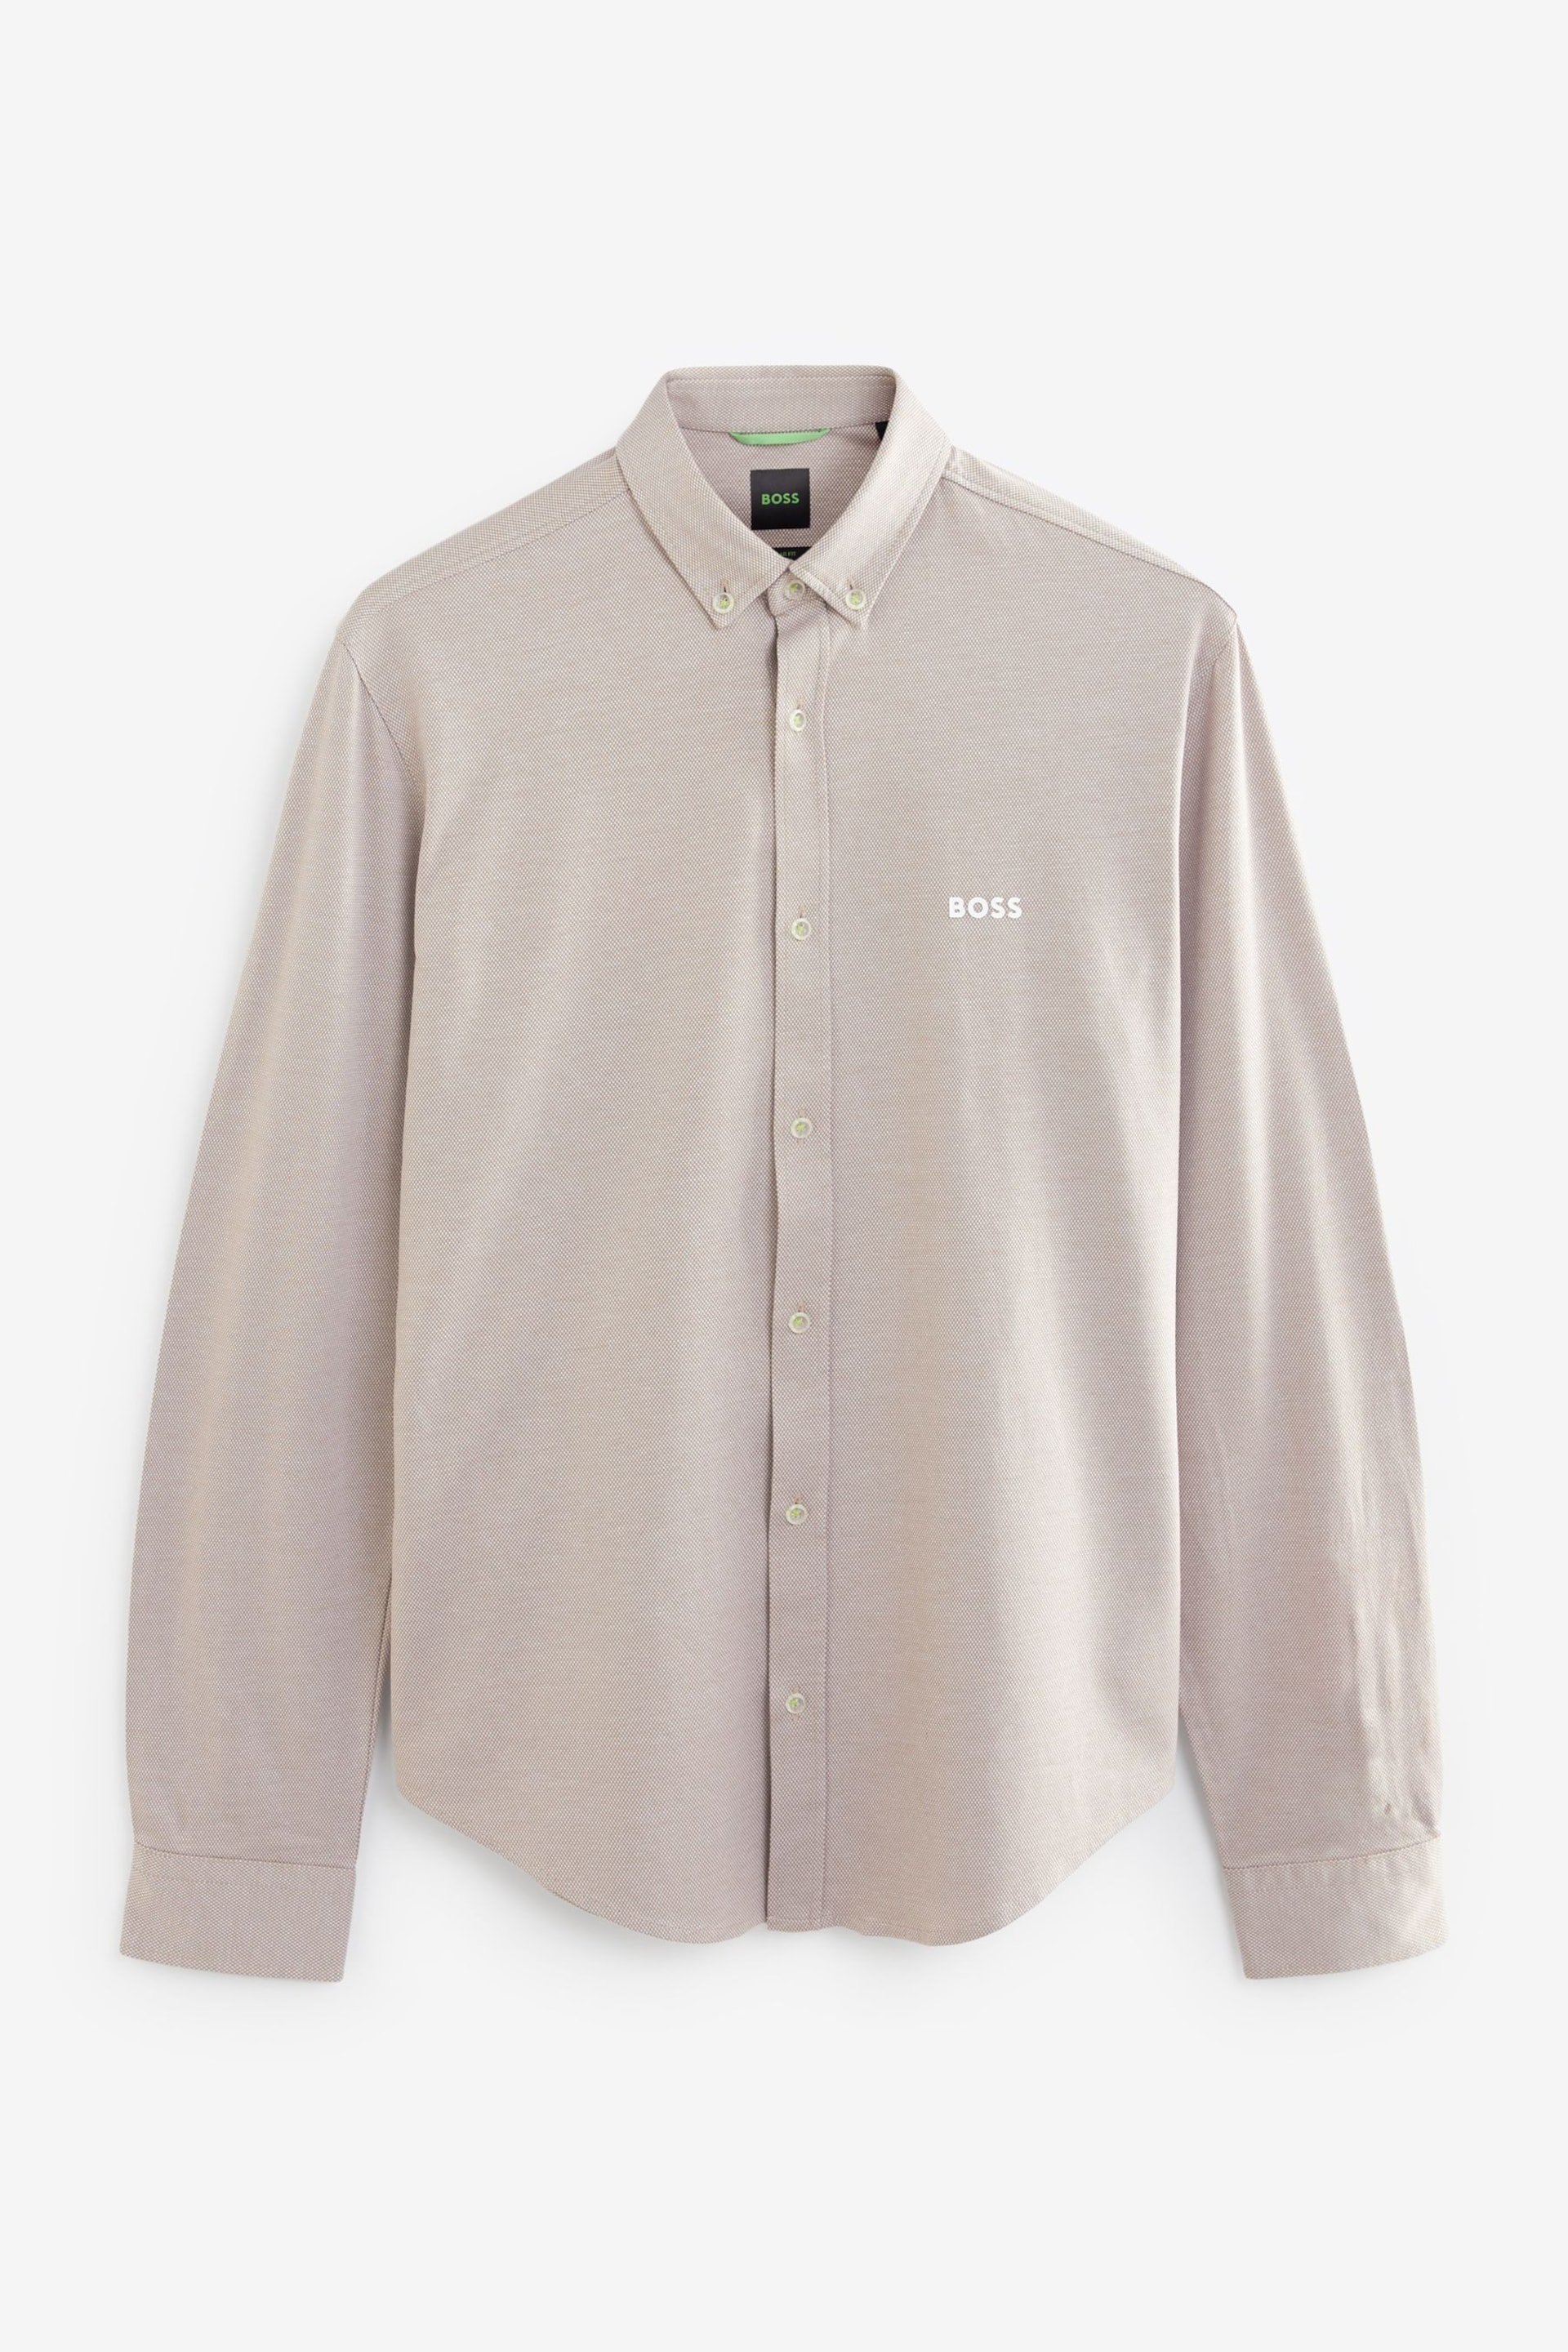 BOSS Beige Biado Long Sleeve Jersey Shirt - Image 6 of 6